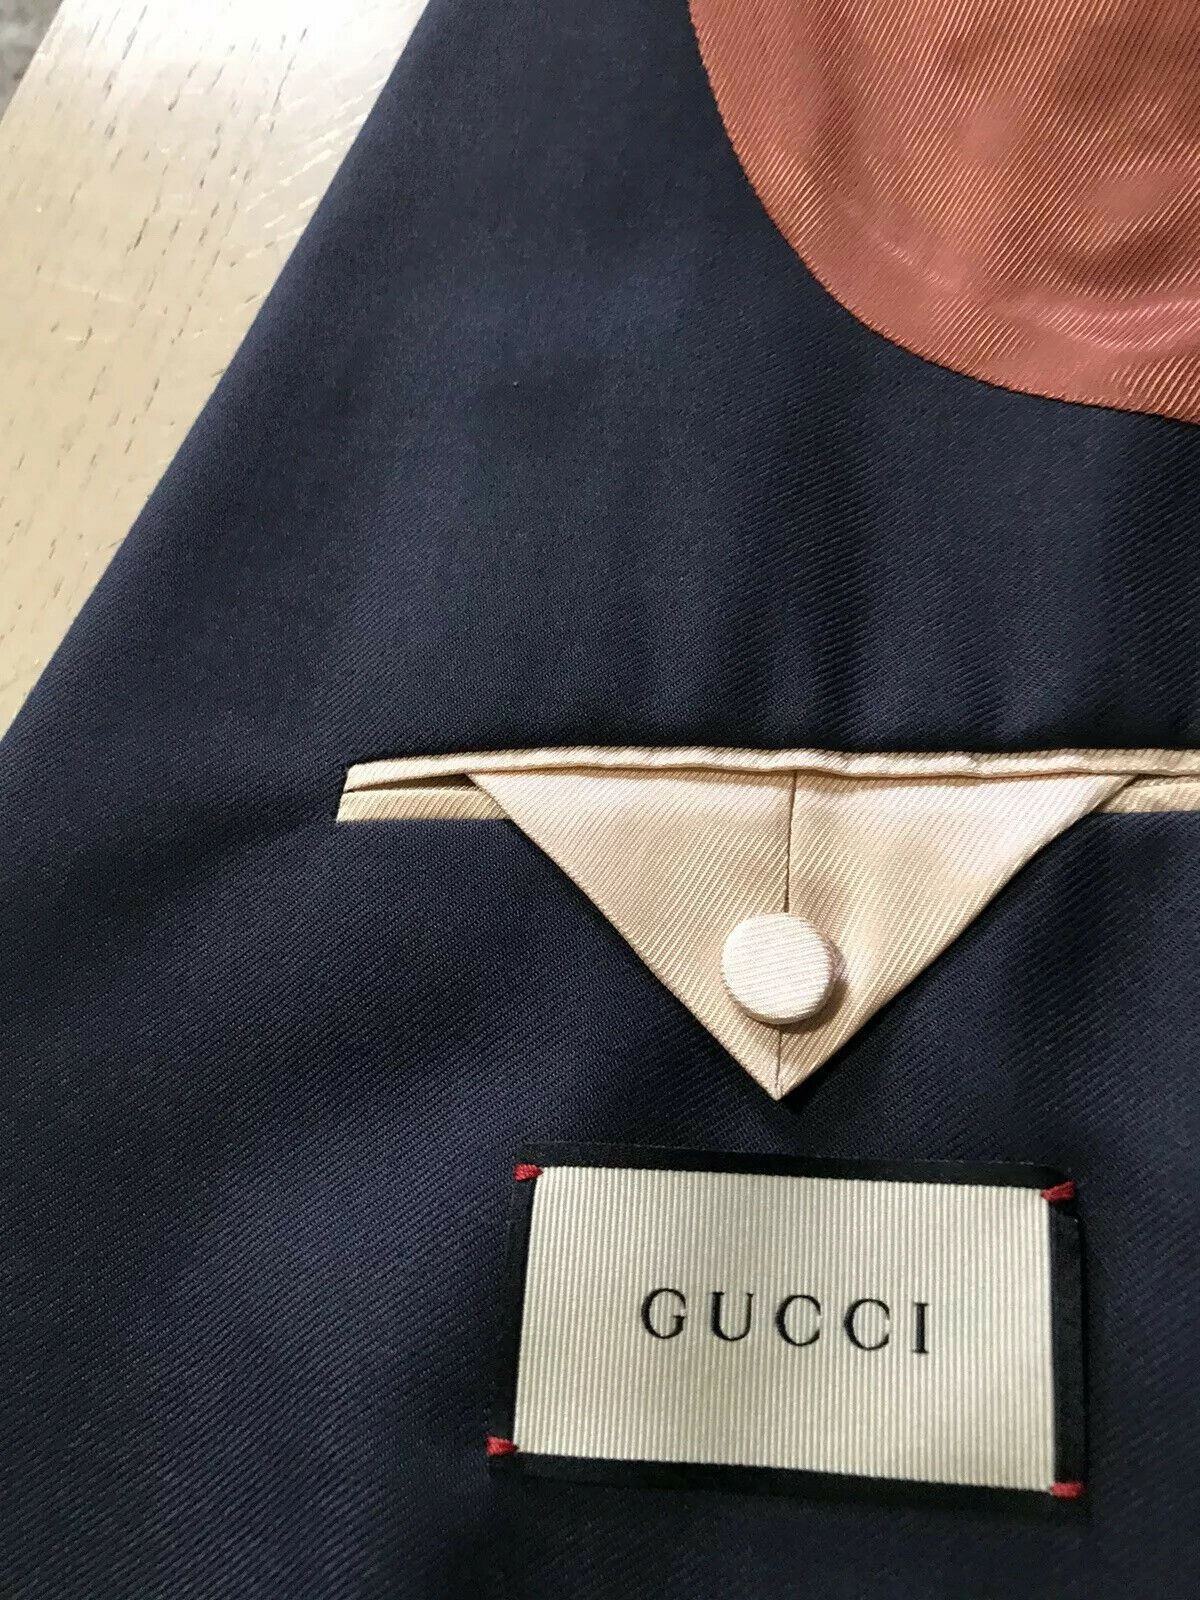 Мужская спортивная куртка Gucci, пиджак, синий, NWT $3200, синий 42R США (52R ЕС) Италия